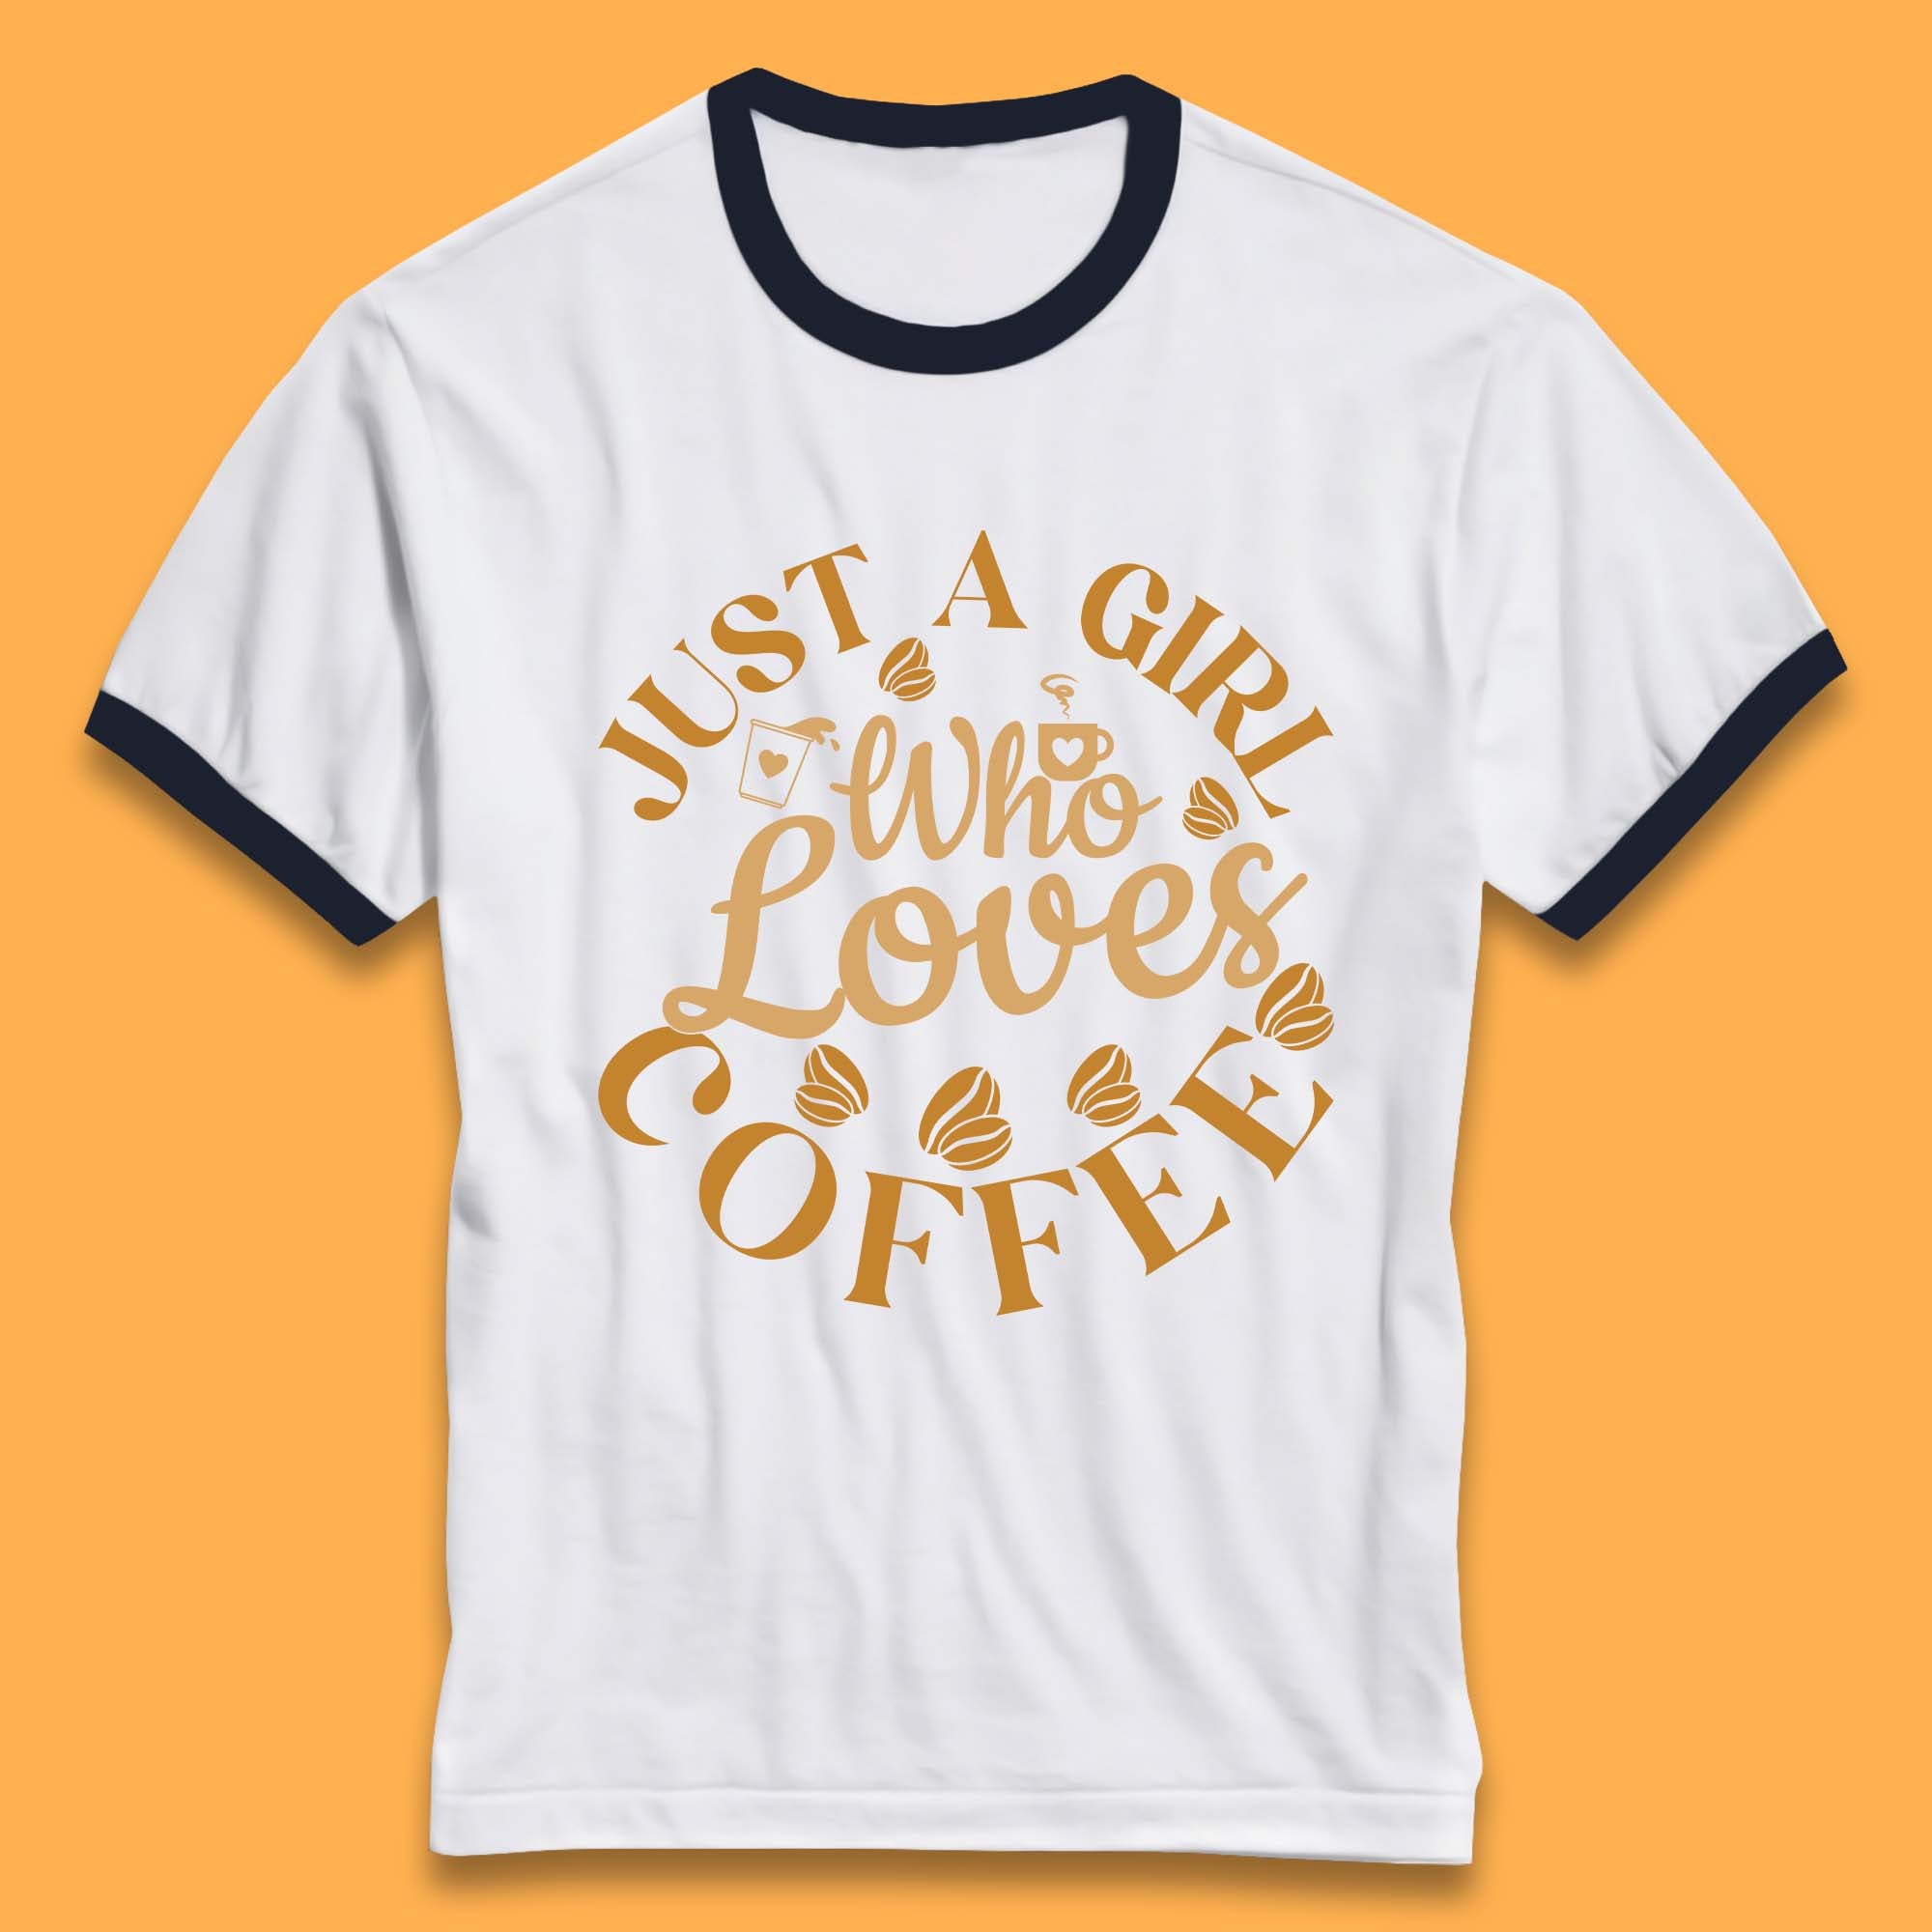 Coffee Enthusiast Ringer T-Shirt